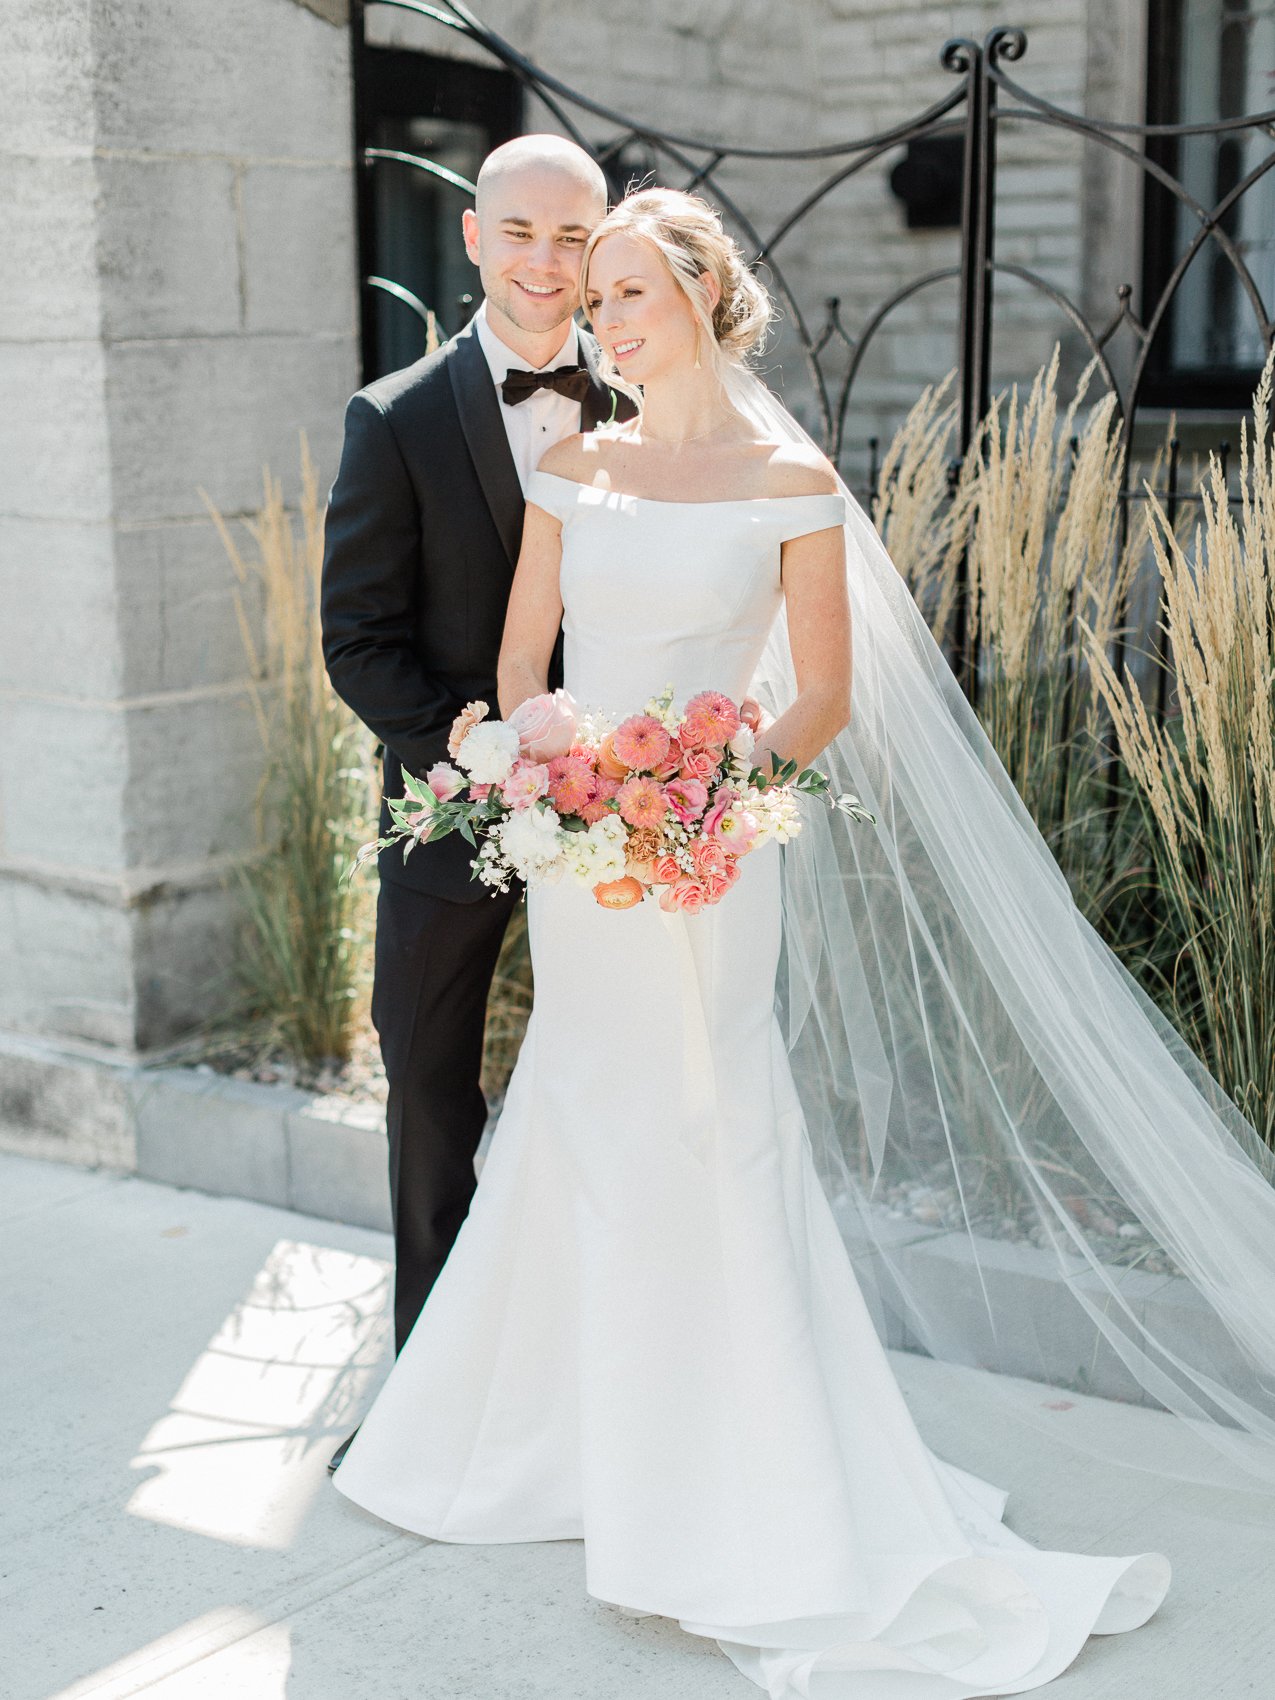 Shauna & Brad Wedding Web 2021 - 181.jpg